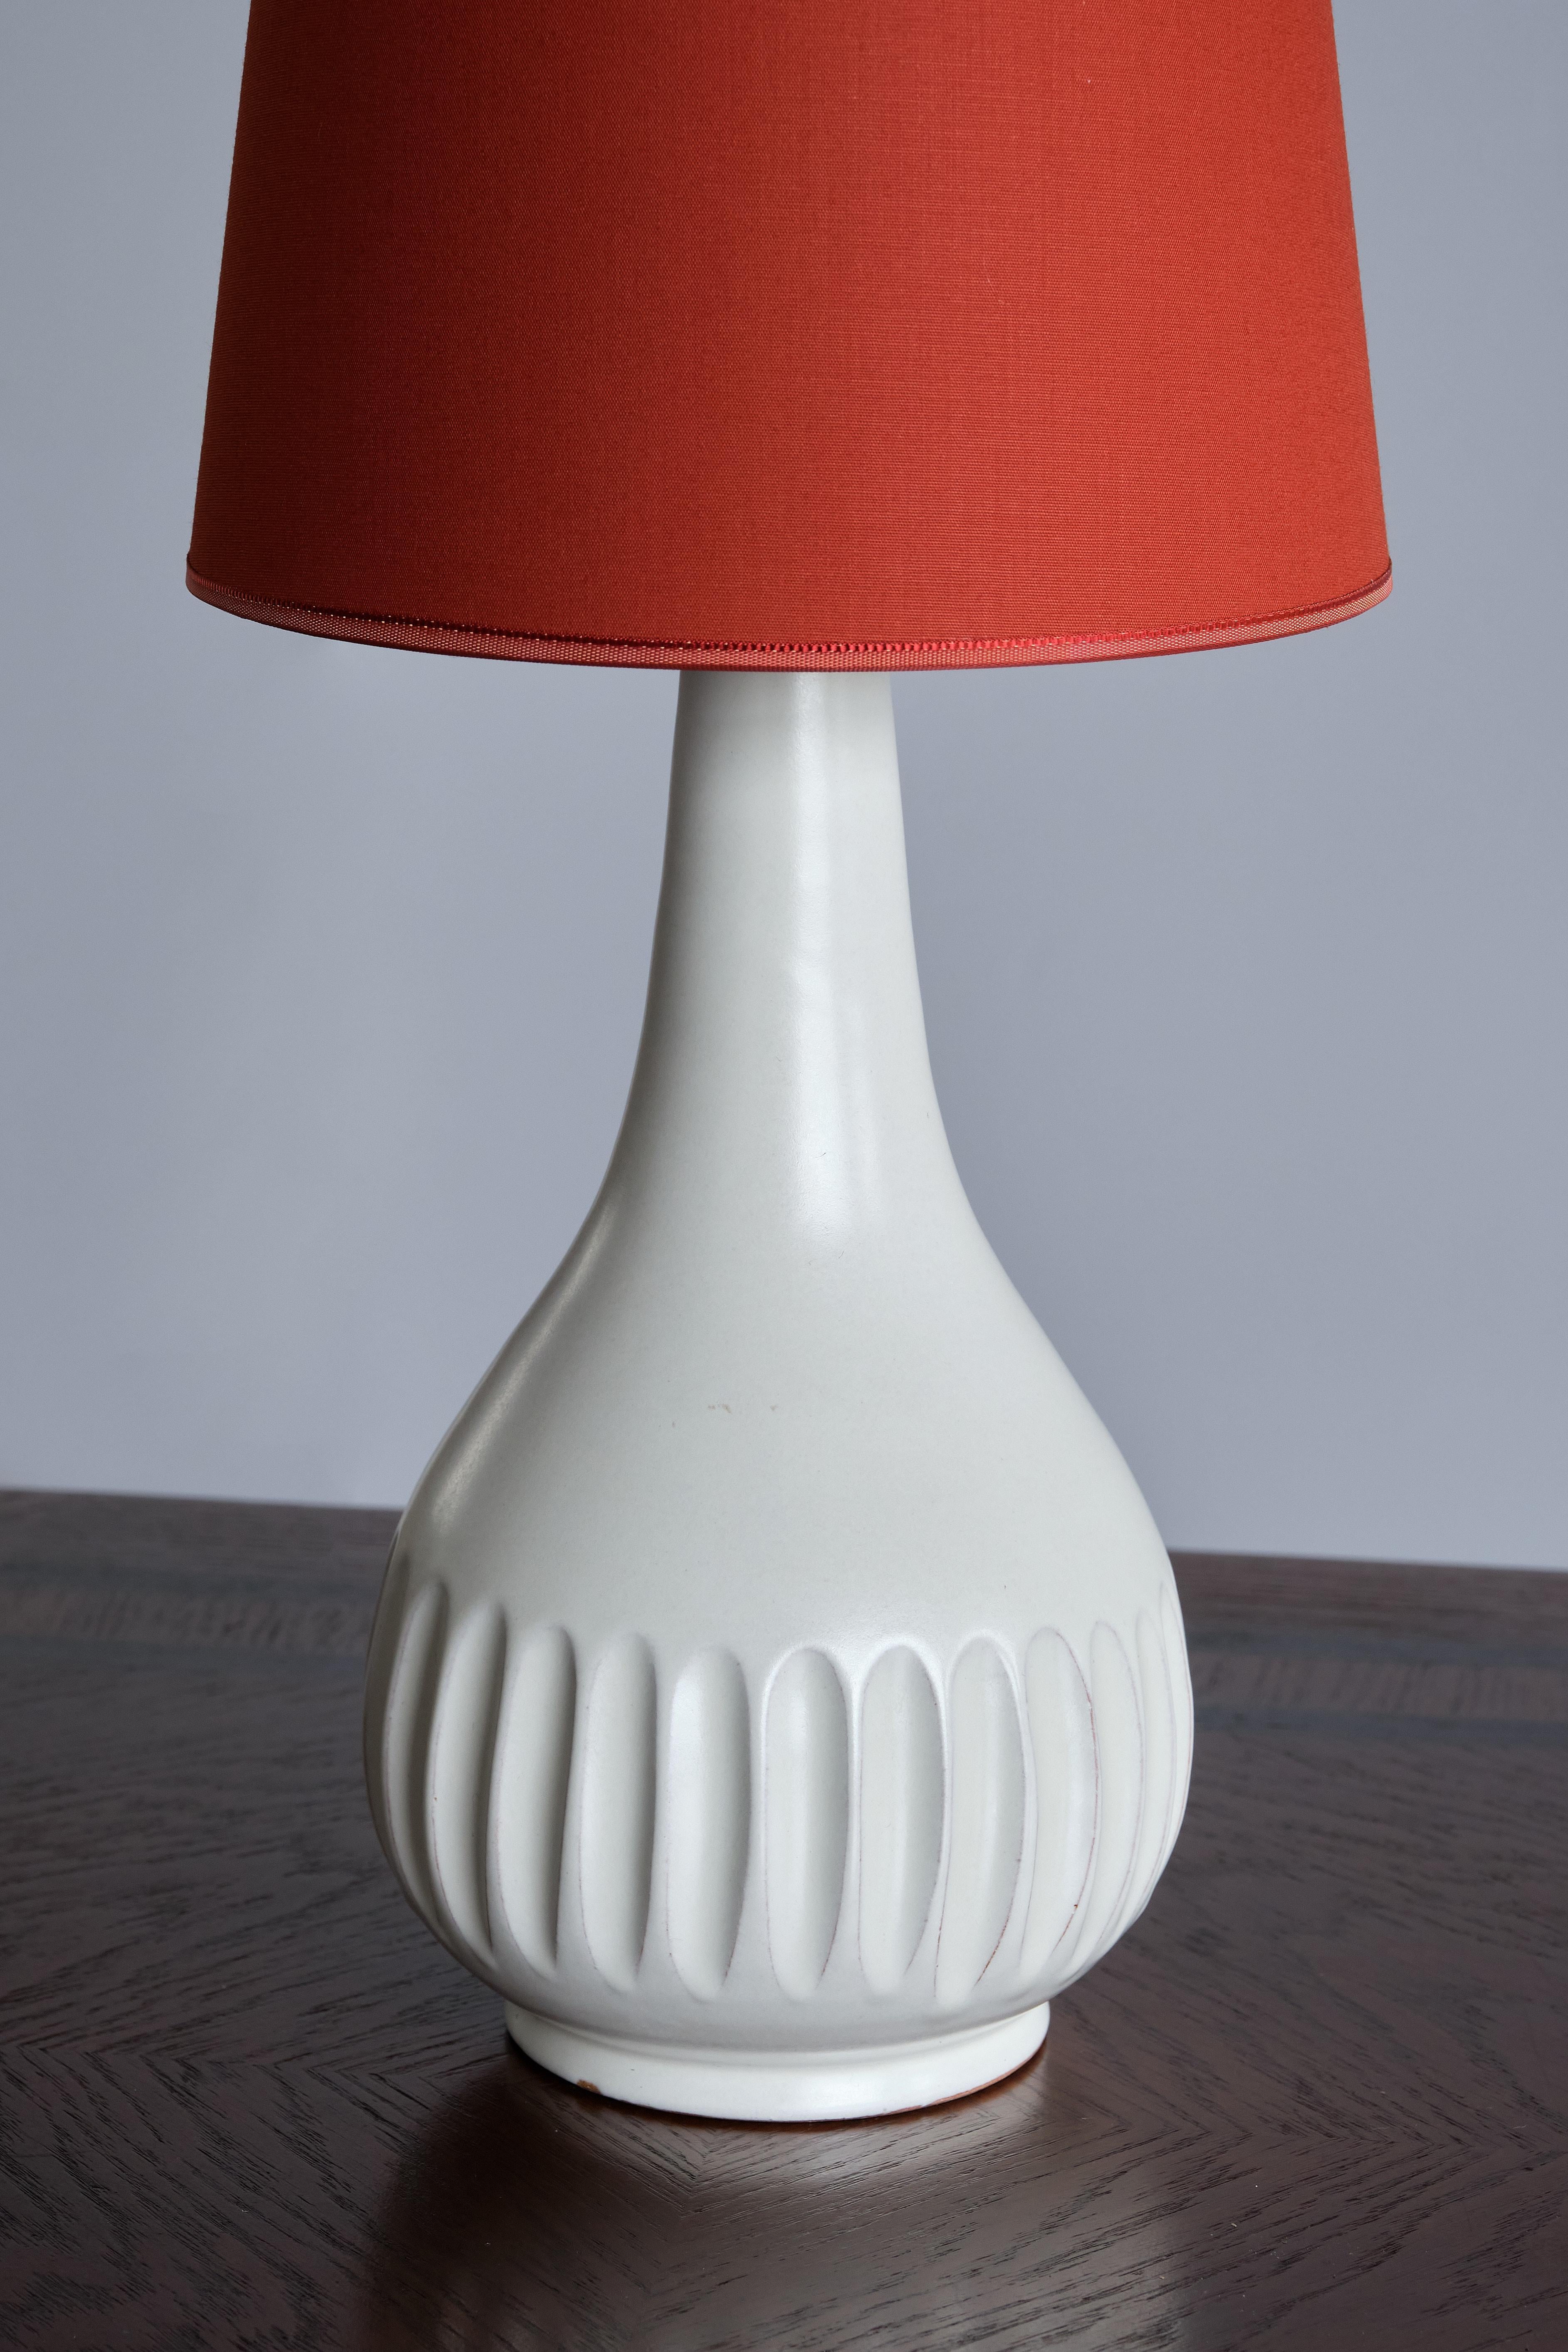 Fabric Anna-Lisa Thomson Ceramic Table Lamp, Upsala-Ekeby, Swedish Modern, 1940s For Sale